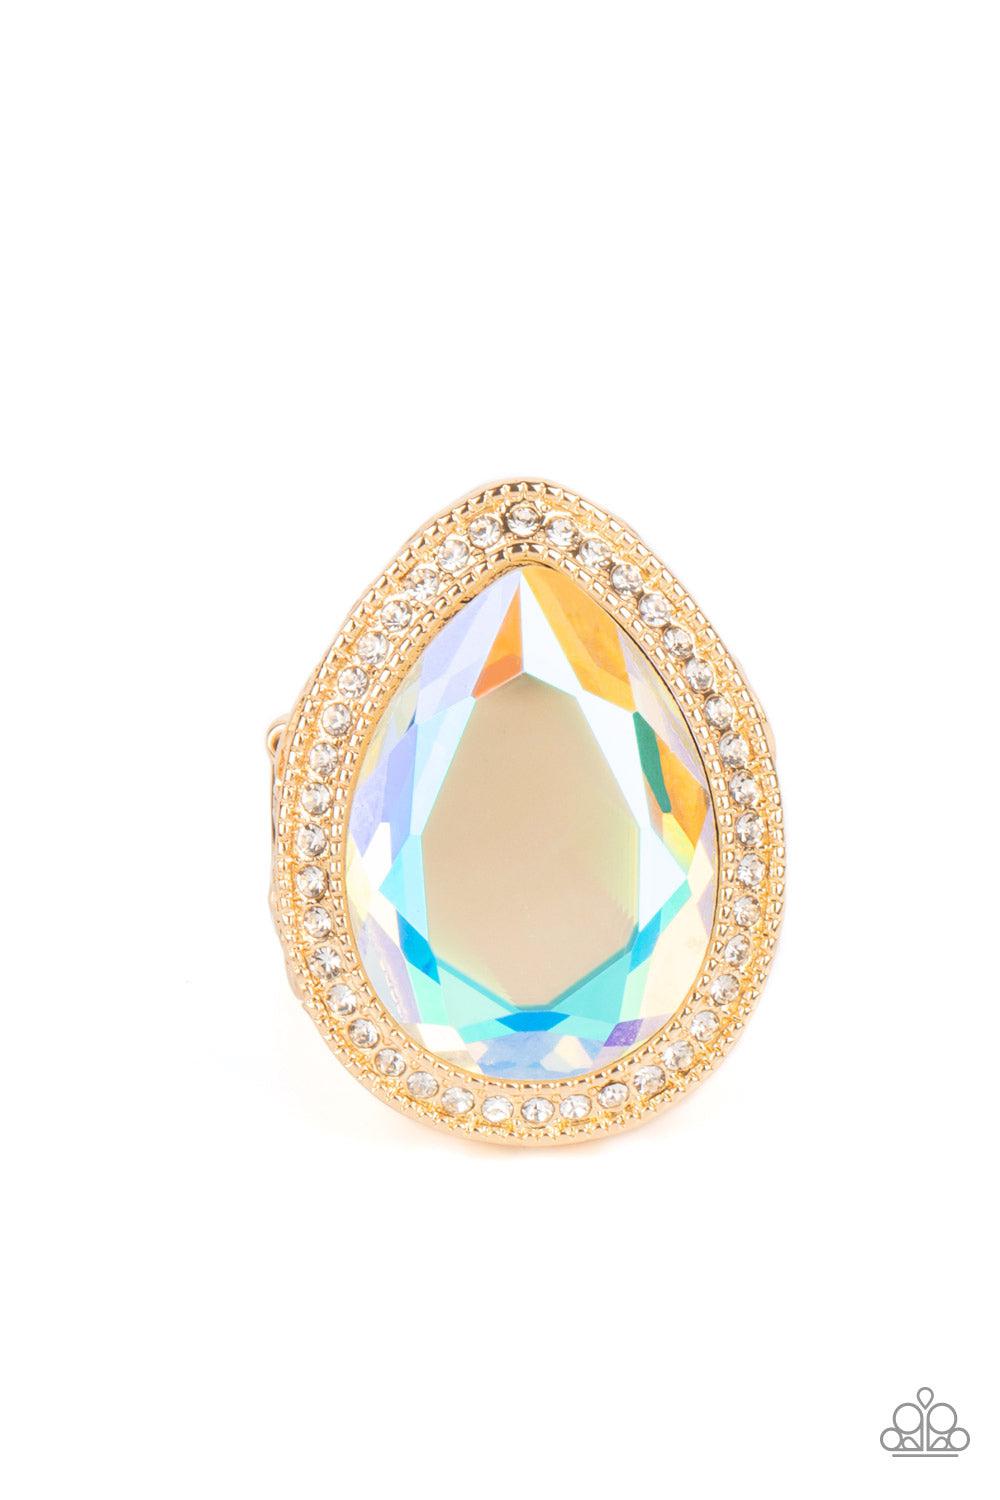 Illuminated Icon Gold & Iridescent Rhinestone Ring - Paparazzi Accessories- lightbox - CarasShop.com - $5 Jewelry by Cara Jewels